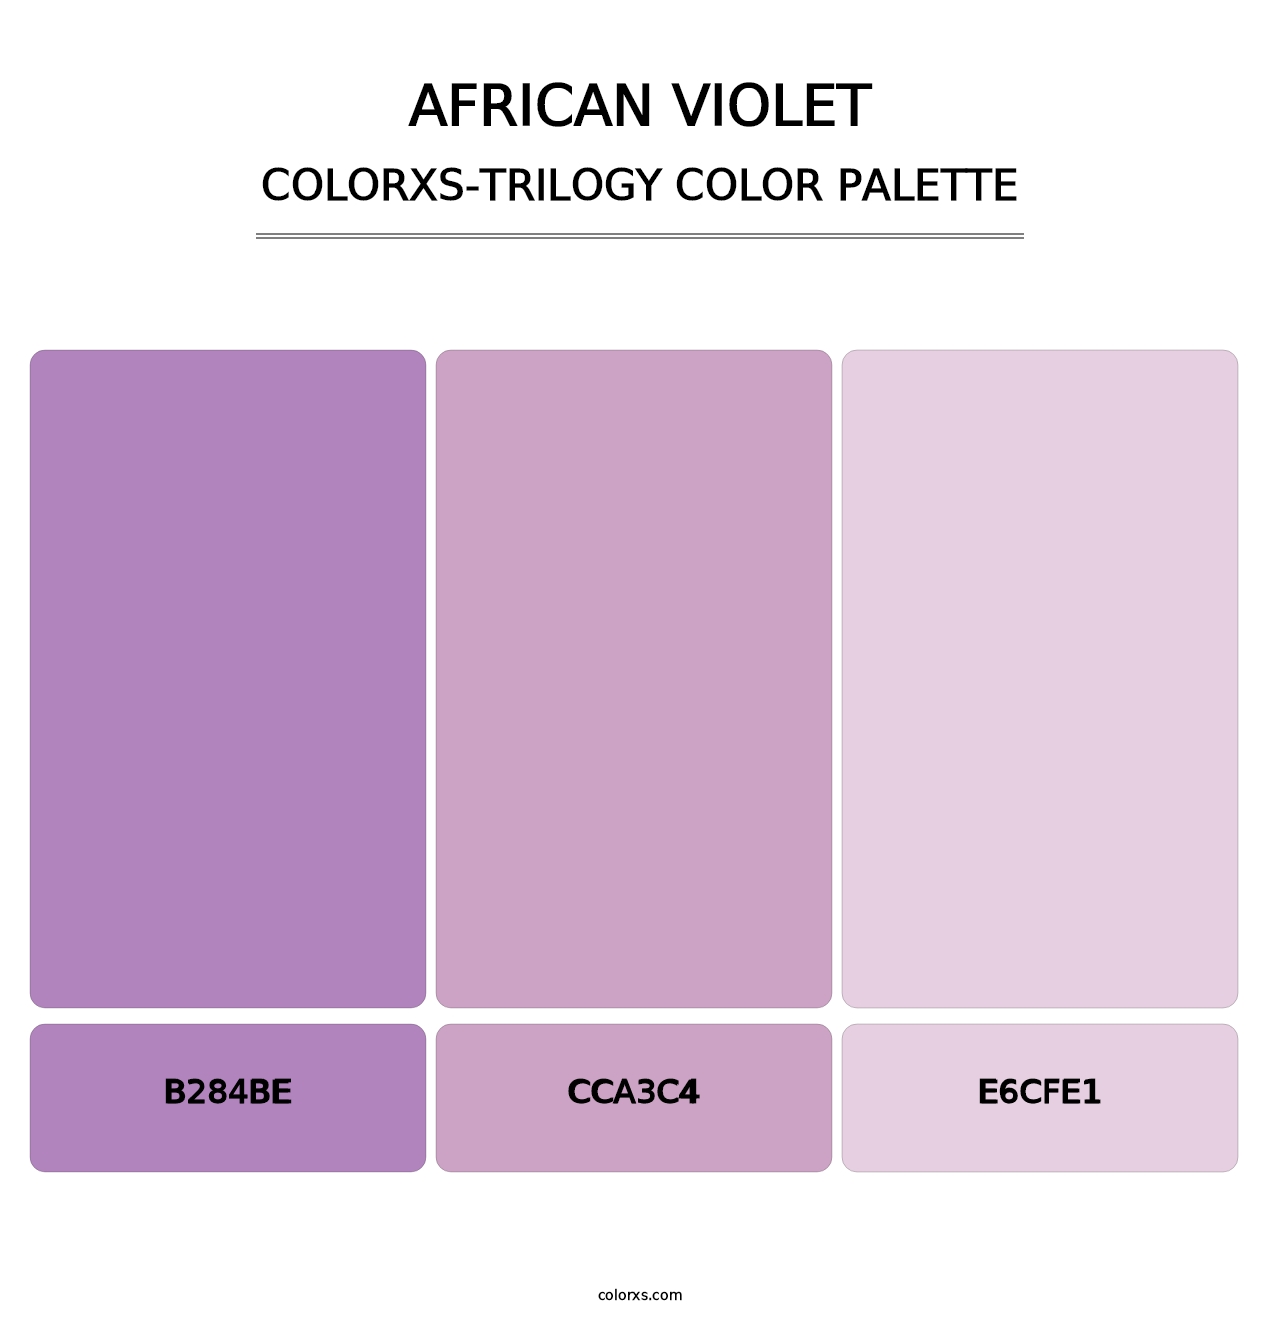 African Violet - Colorxs Trilogy Palette